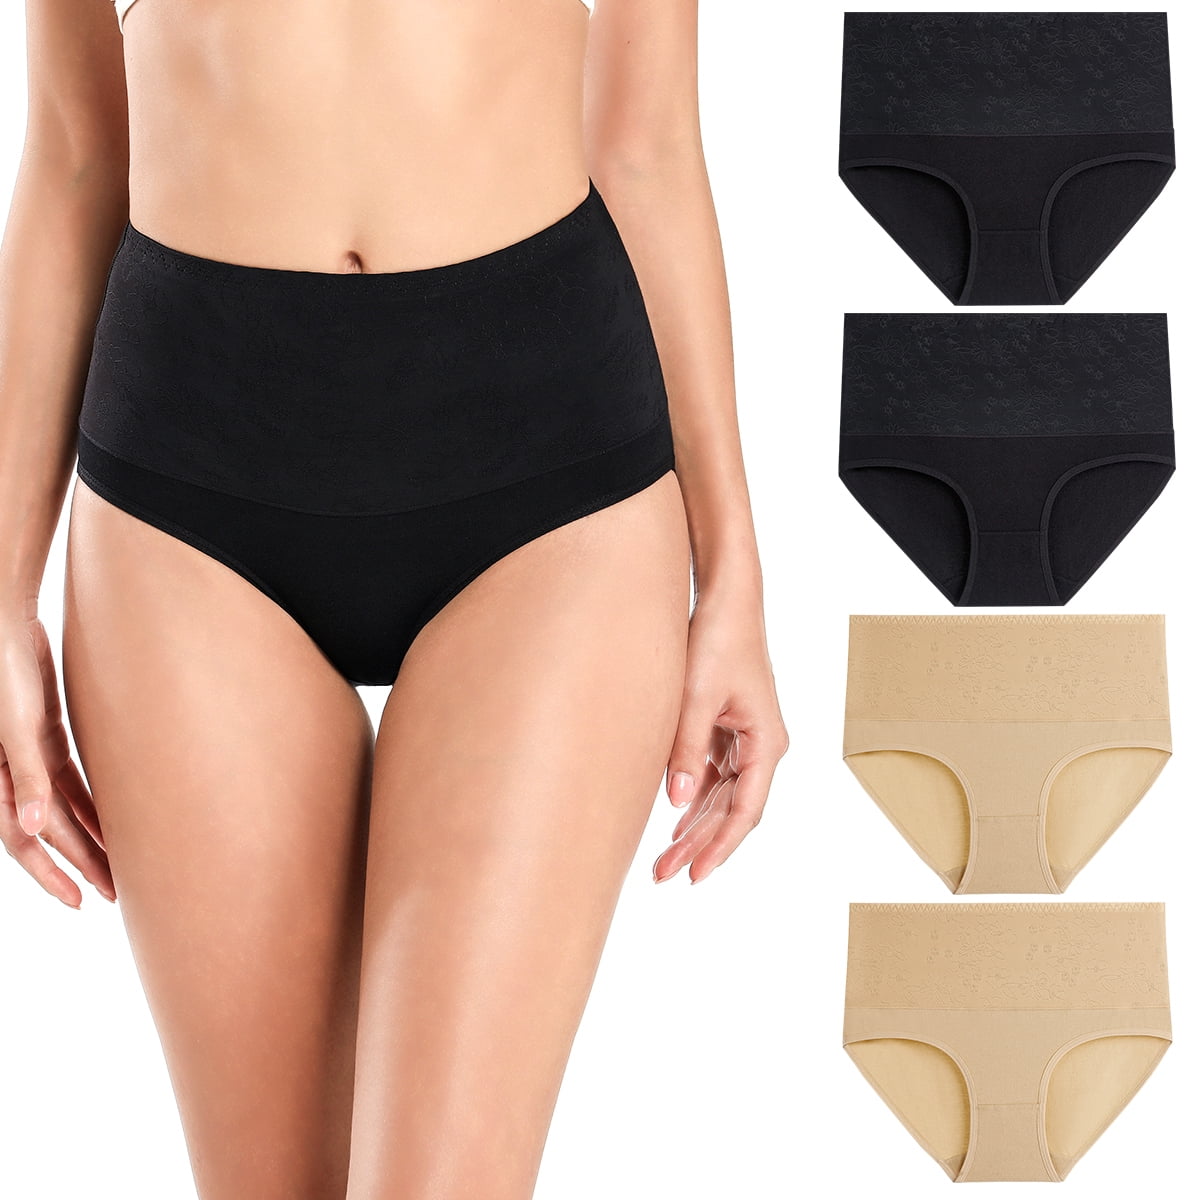 Hanes Premium Women's 4pk Tummy Control Briefs Underwear - Fashion Pack  Colors M 